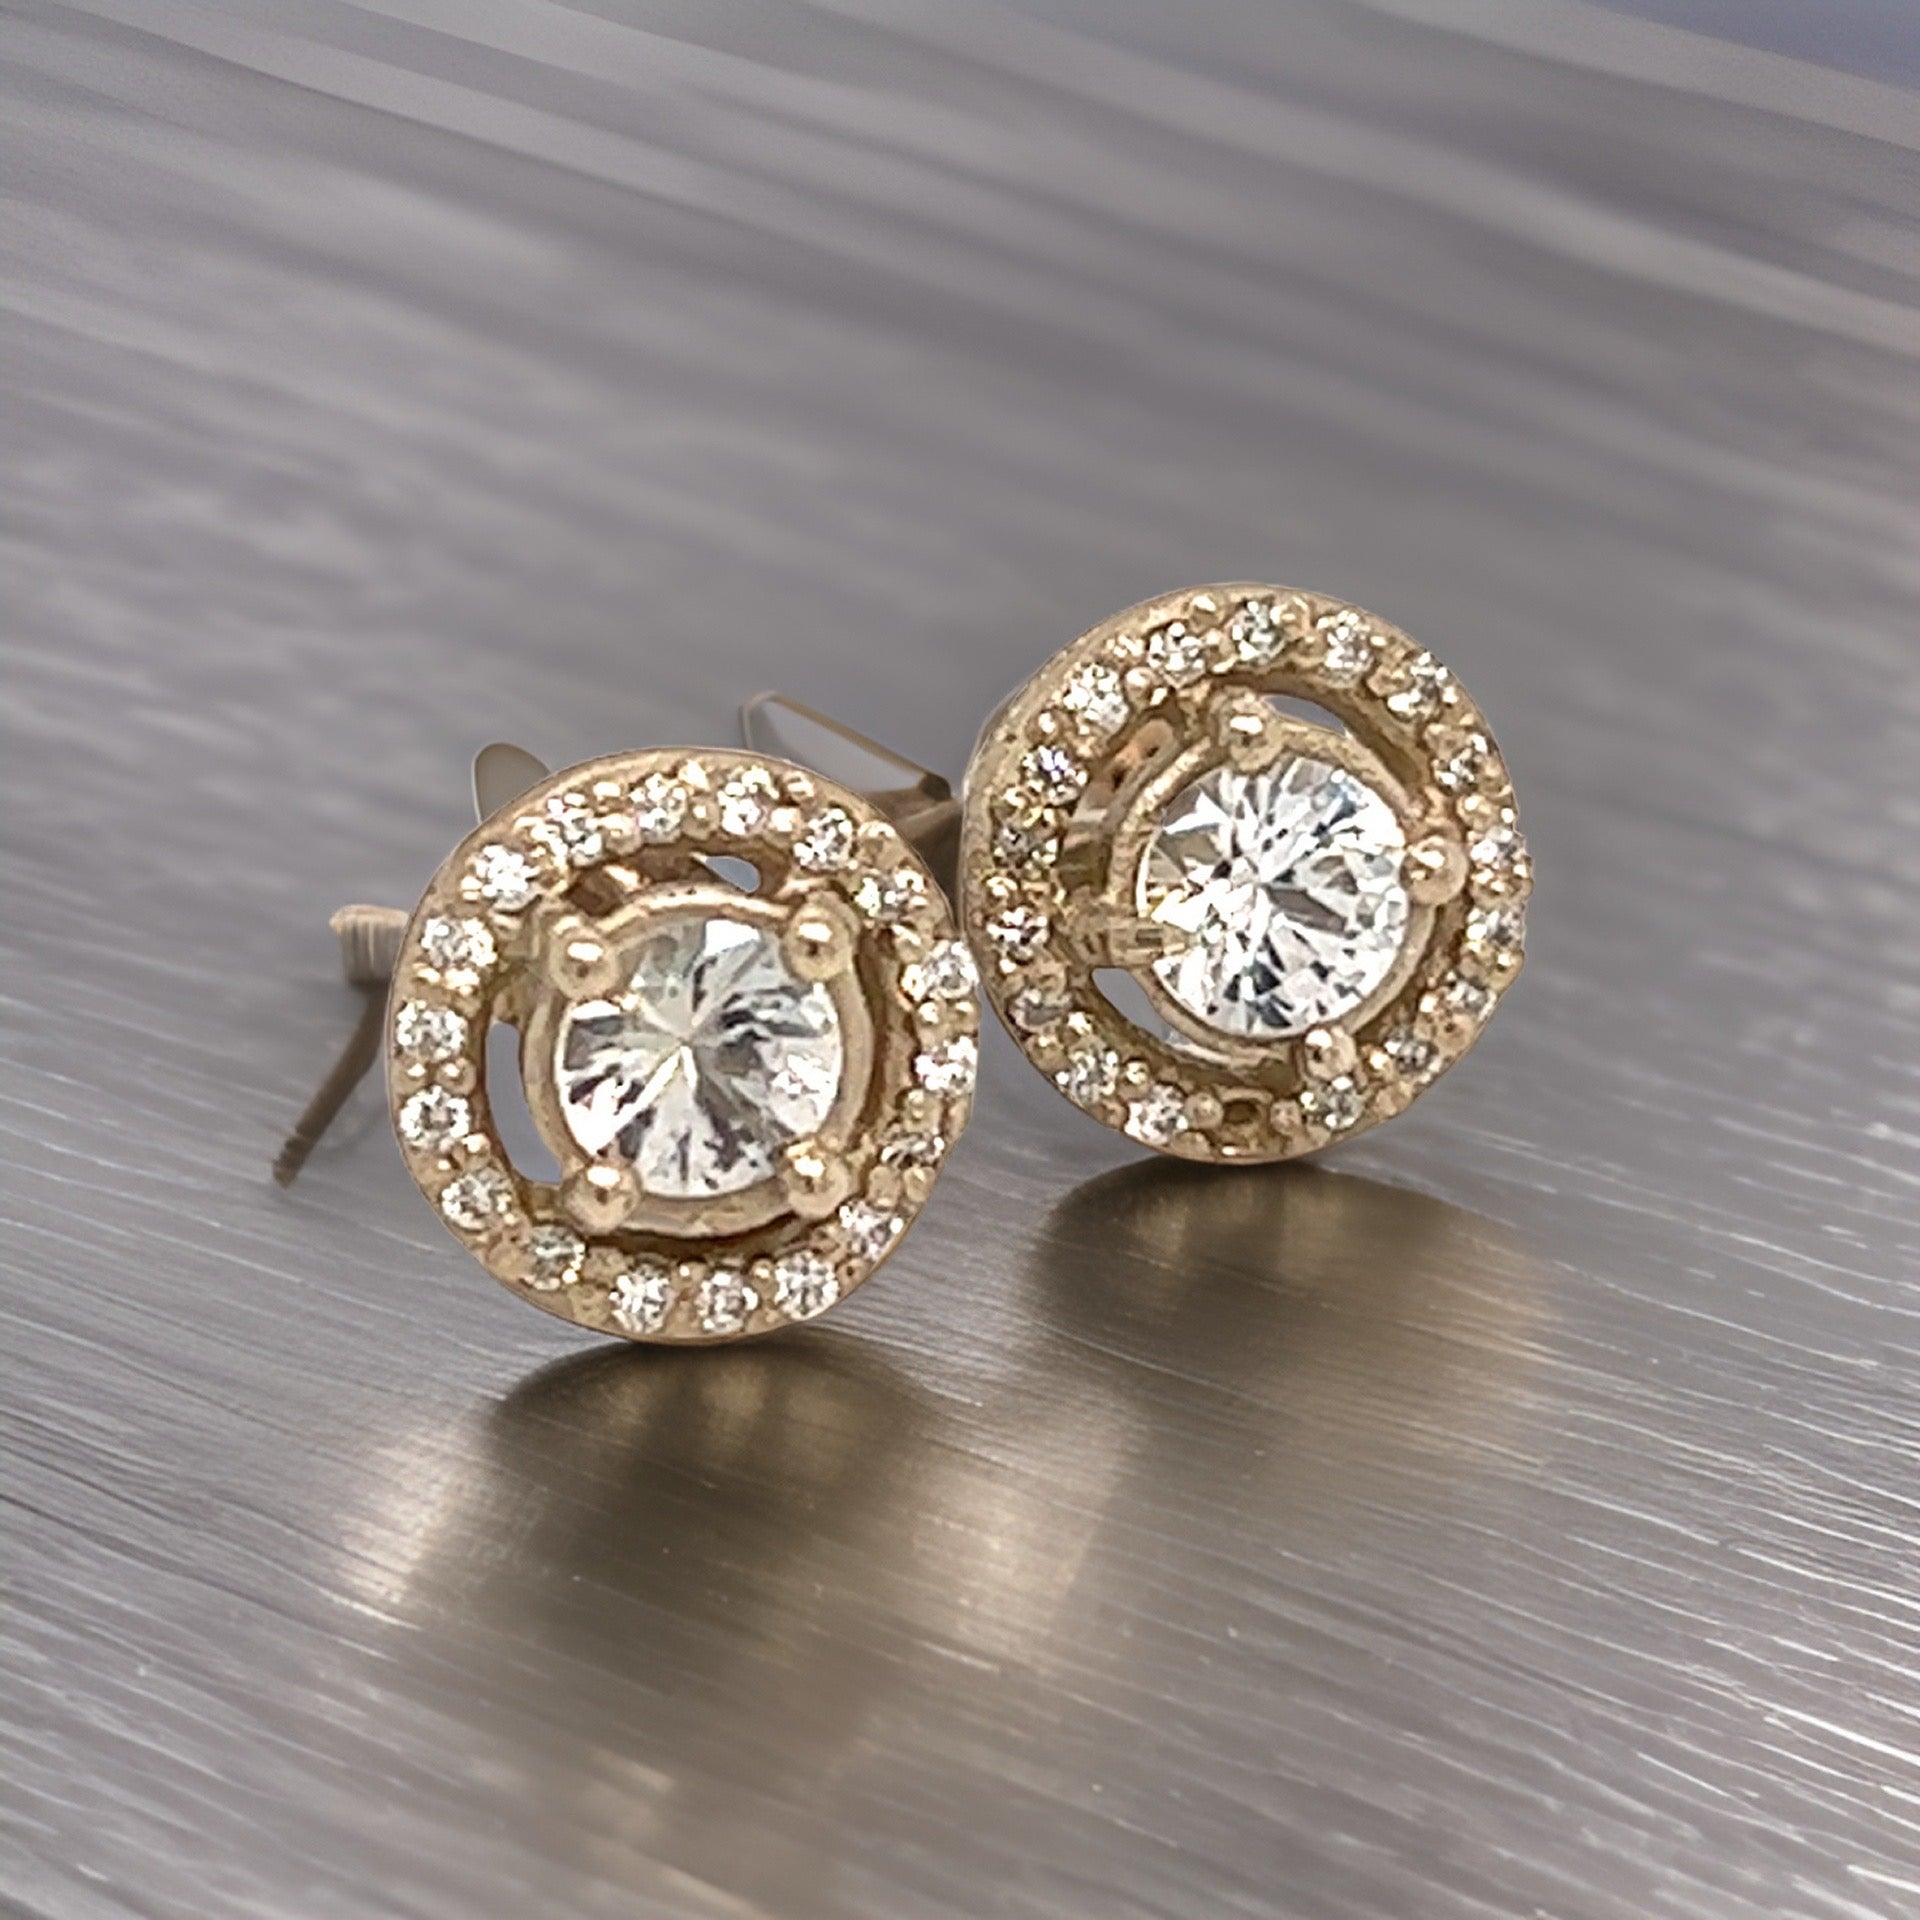 Natural Sapphire Diamond Stud Earrings 14k W Gold 0.83 TCW Certified $2,950 215614